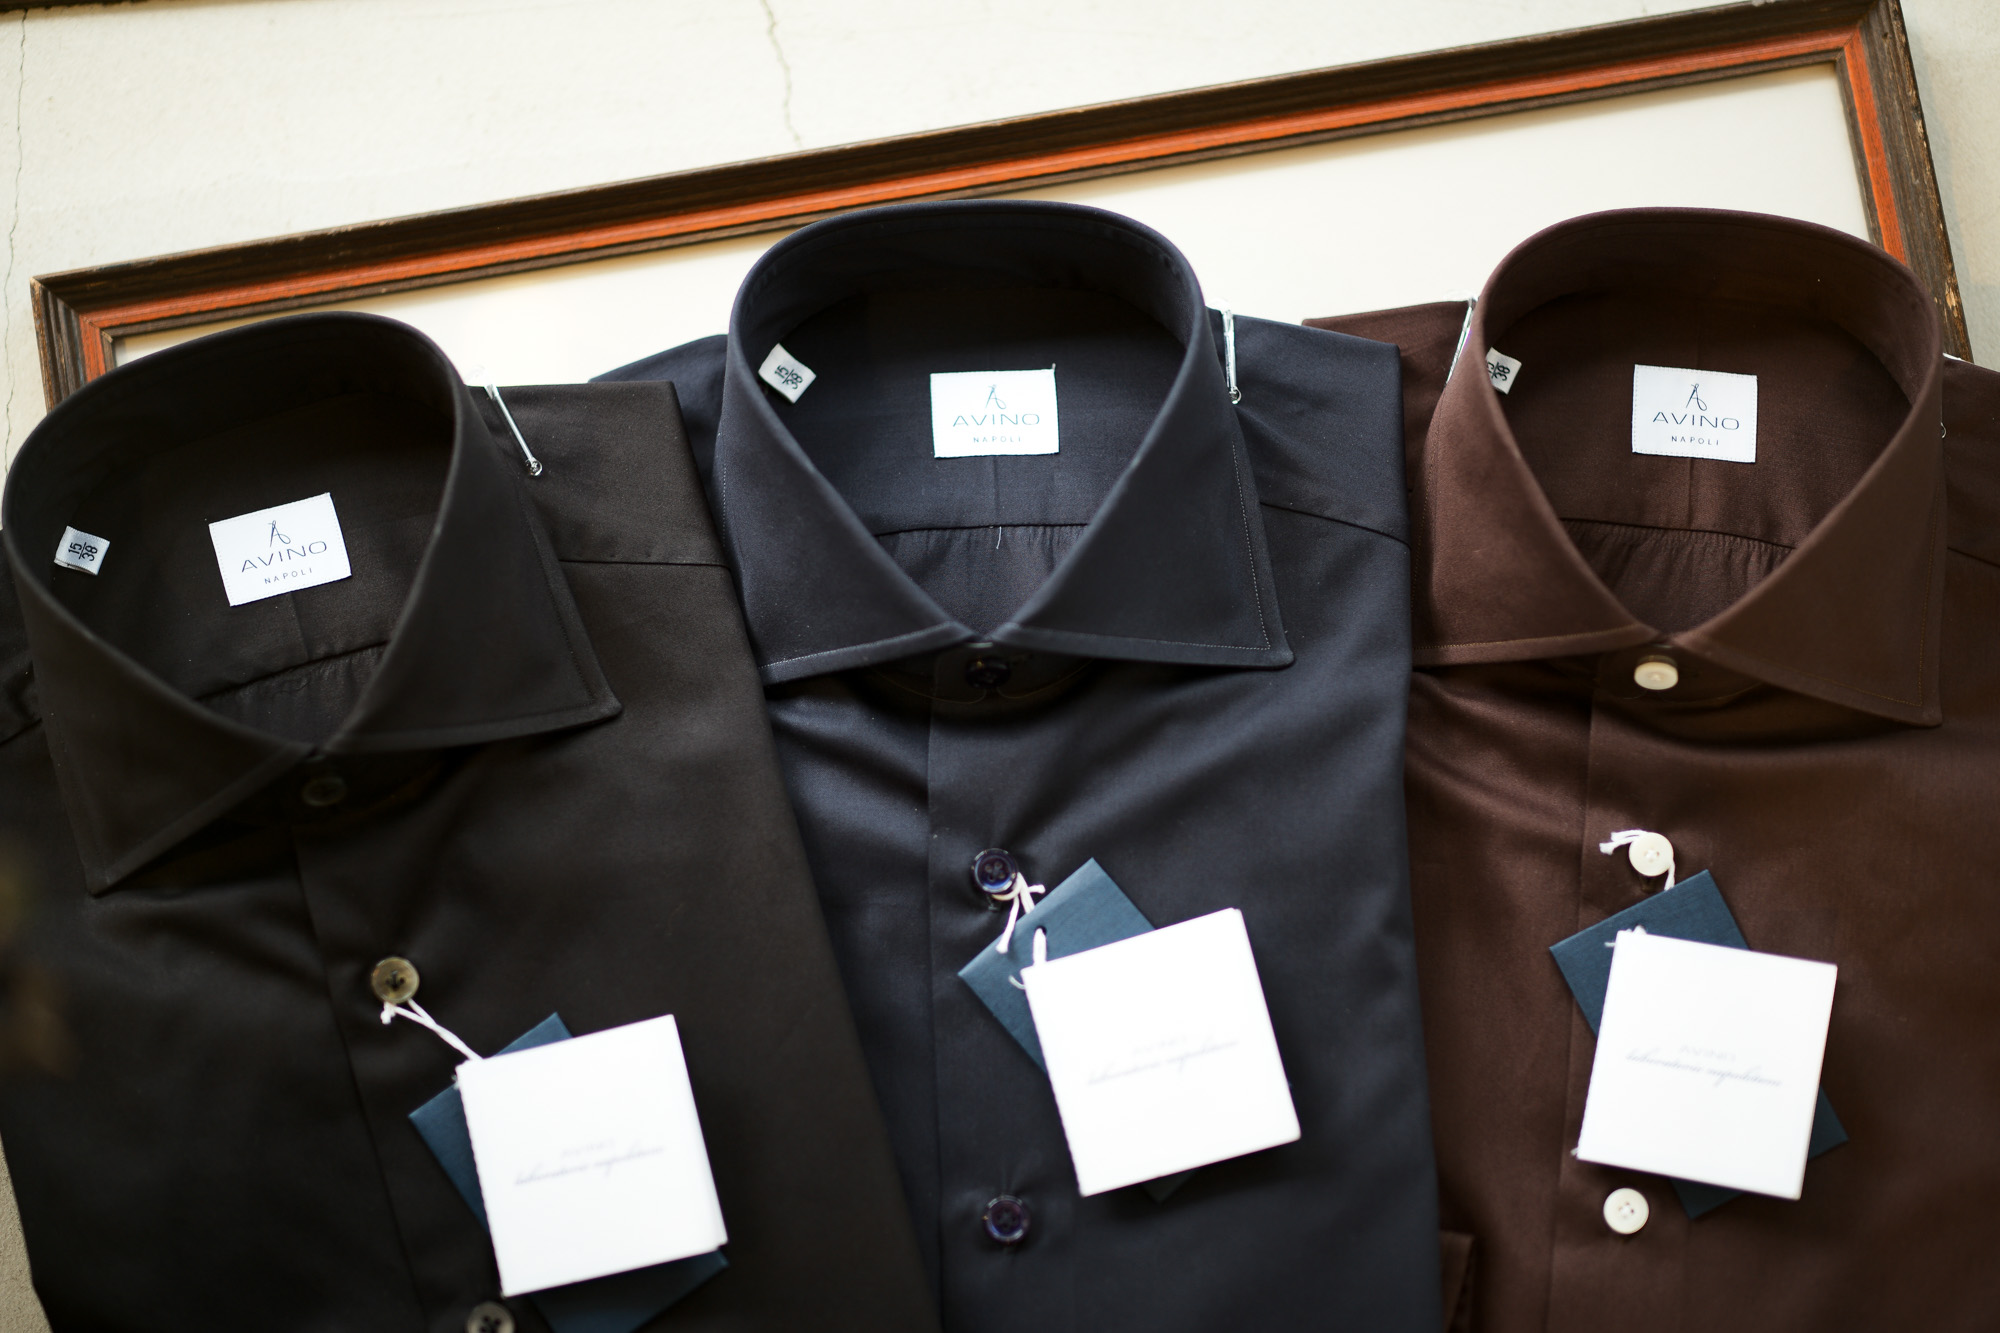 AVINO(アヴィーノ) Poplin Dress Shirts コットン ブロード ポプリン ドレスシャツ BLACK(ブラック),NAVY(ネイビー),BROWN(ブラウン), made in italy (イタリア製) 2019 秋冬 愛知 名古屋 altoediritto アルトエデリット